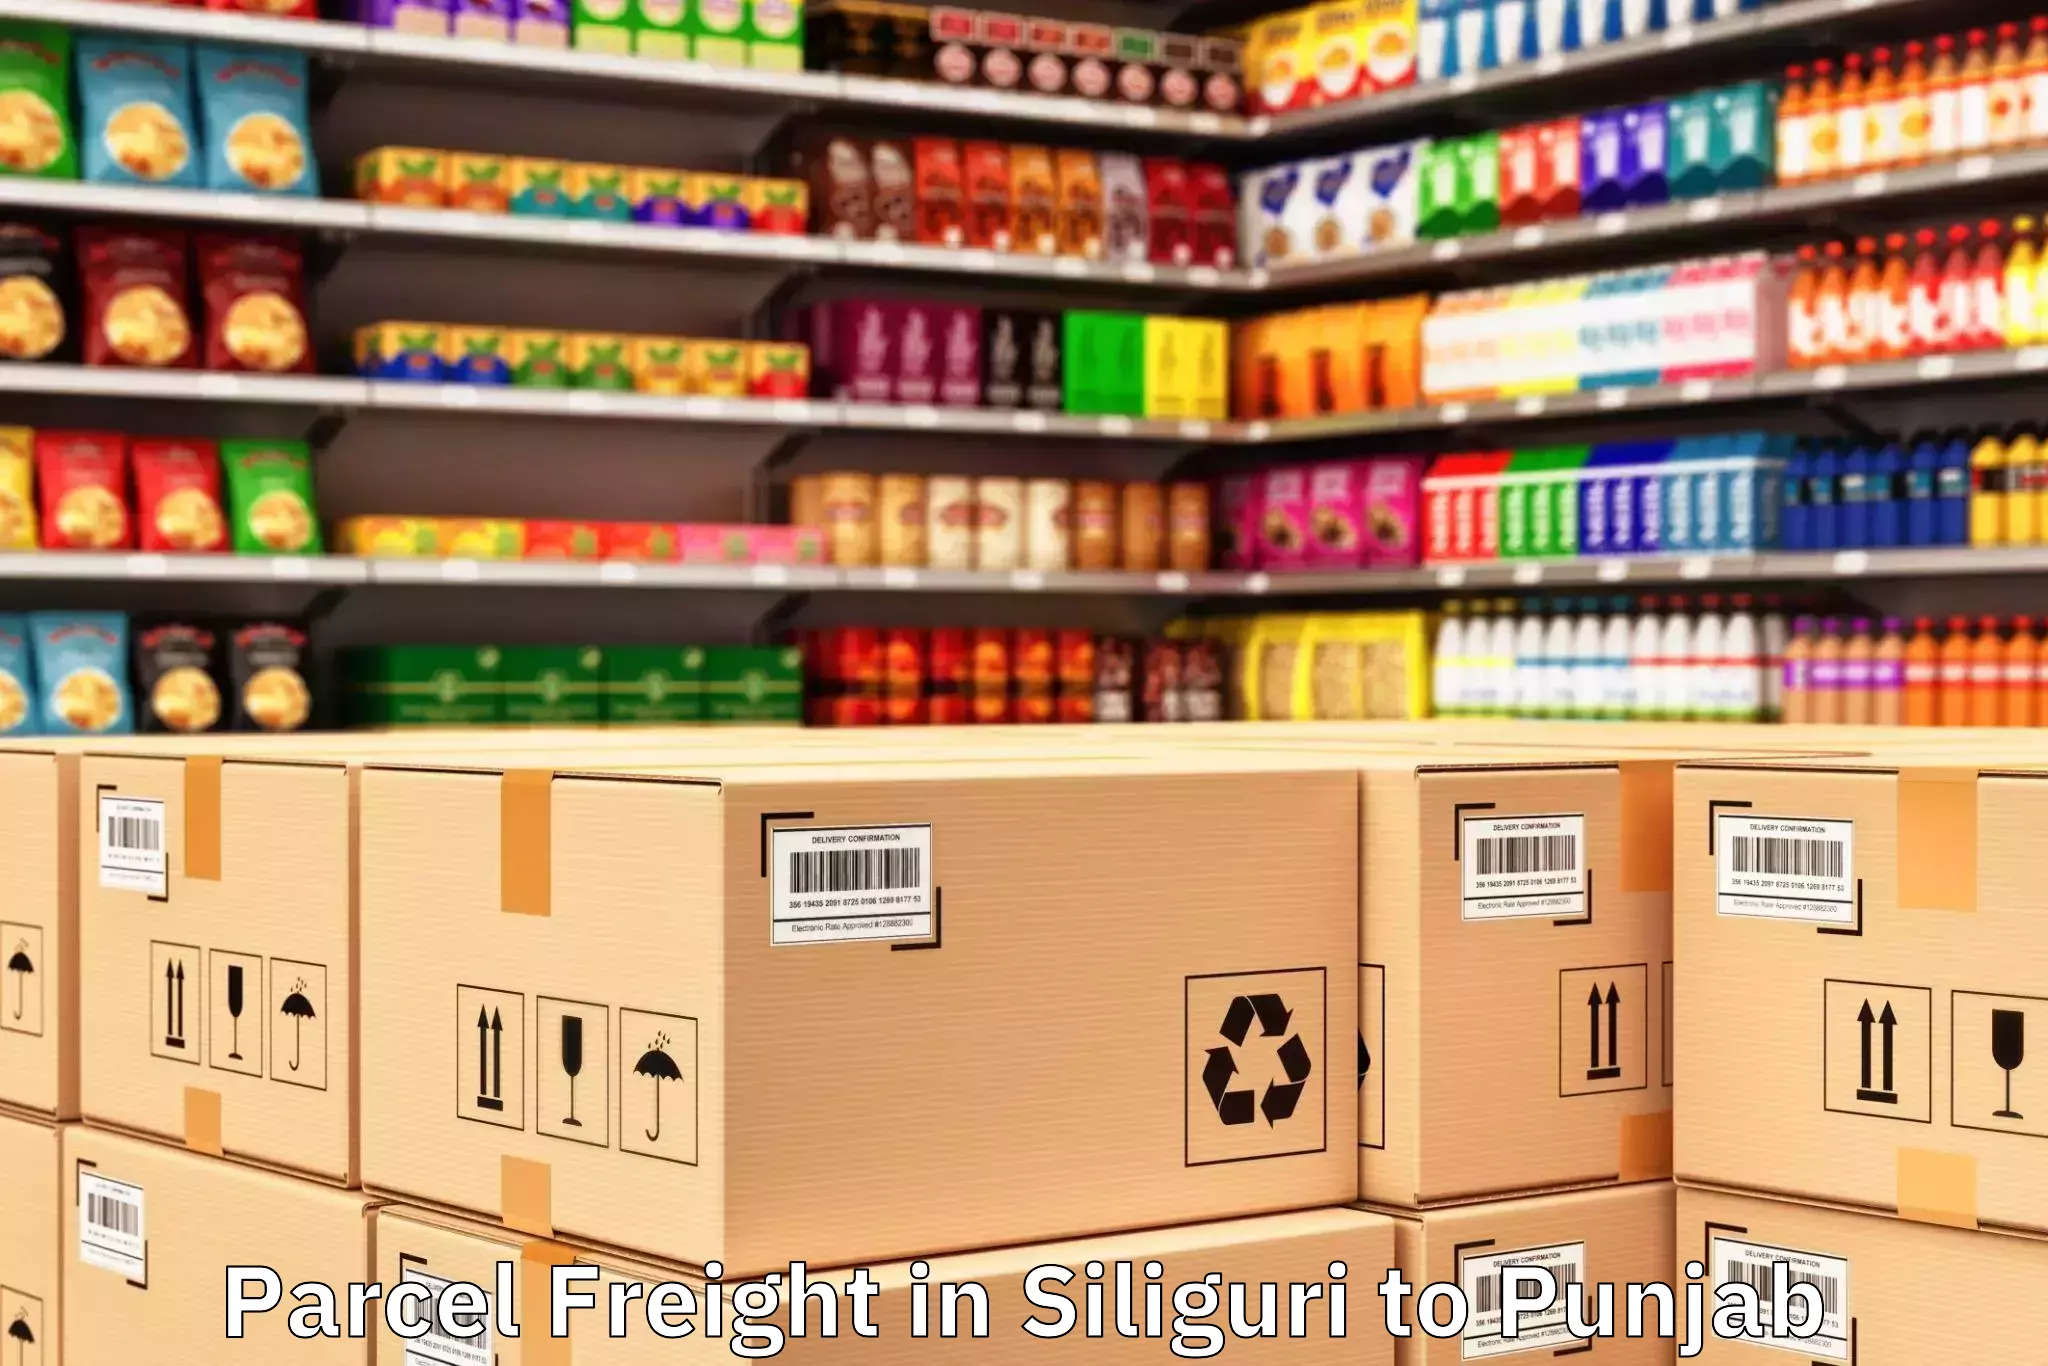 Top Siliguri to Lovely Professional University Phagwara Parcel Freight Available